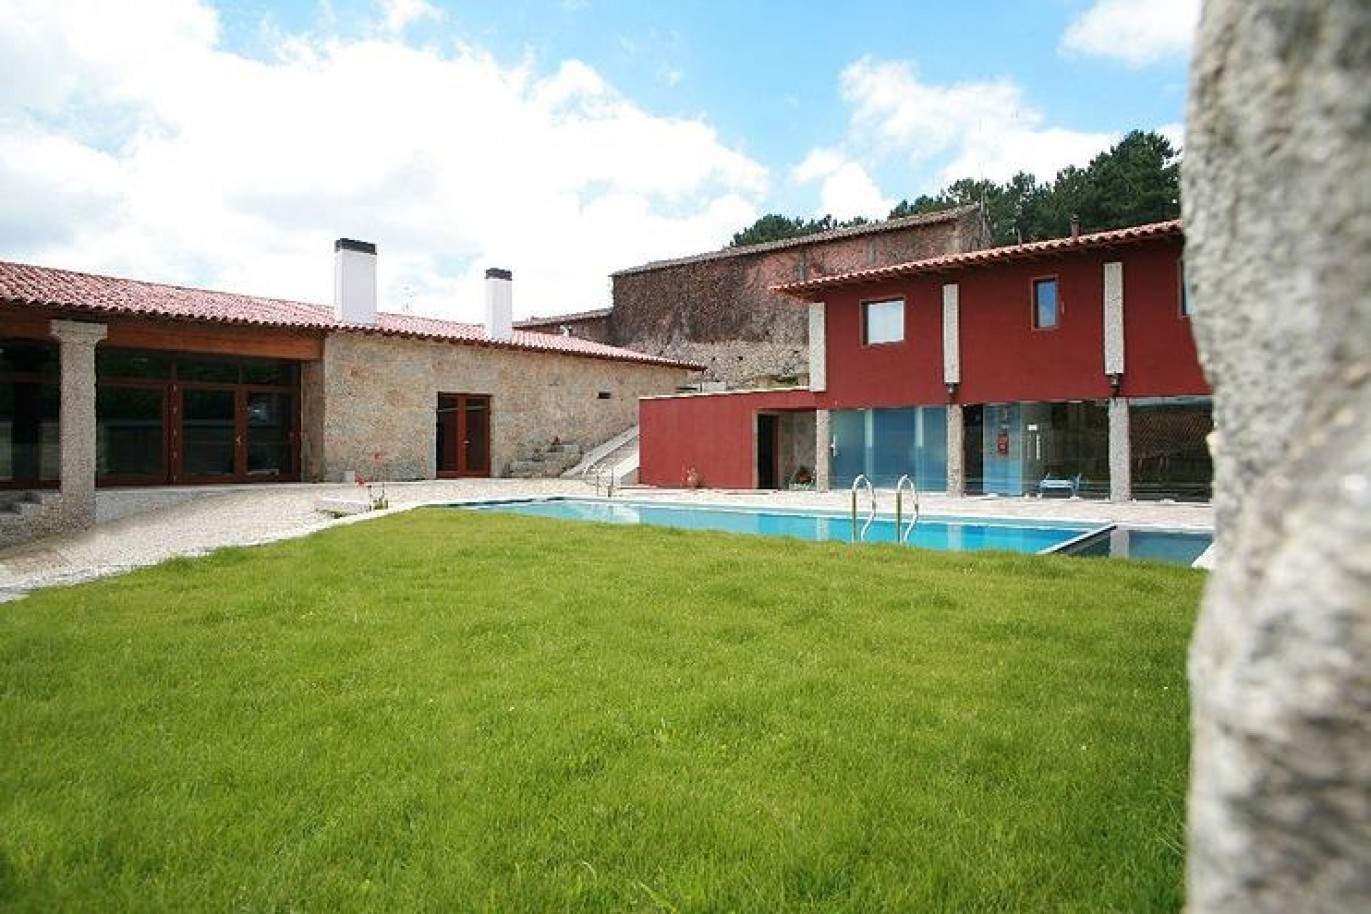 Hotel rural com piscina e jardim, S. Vicente Penso, Braga_35968